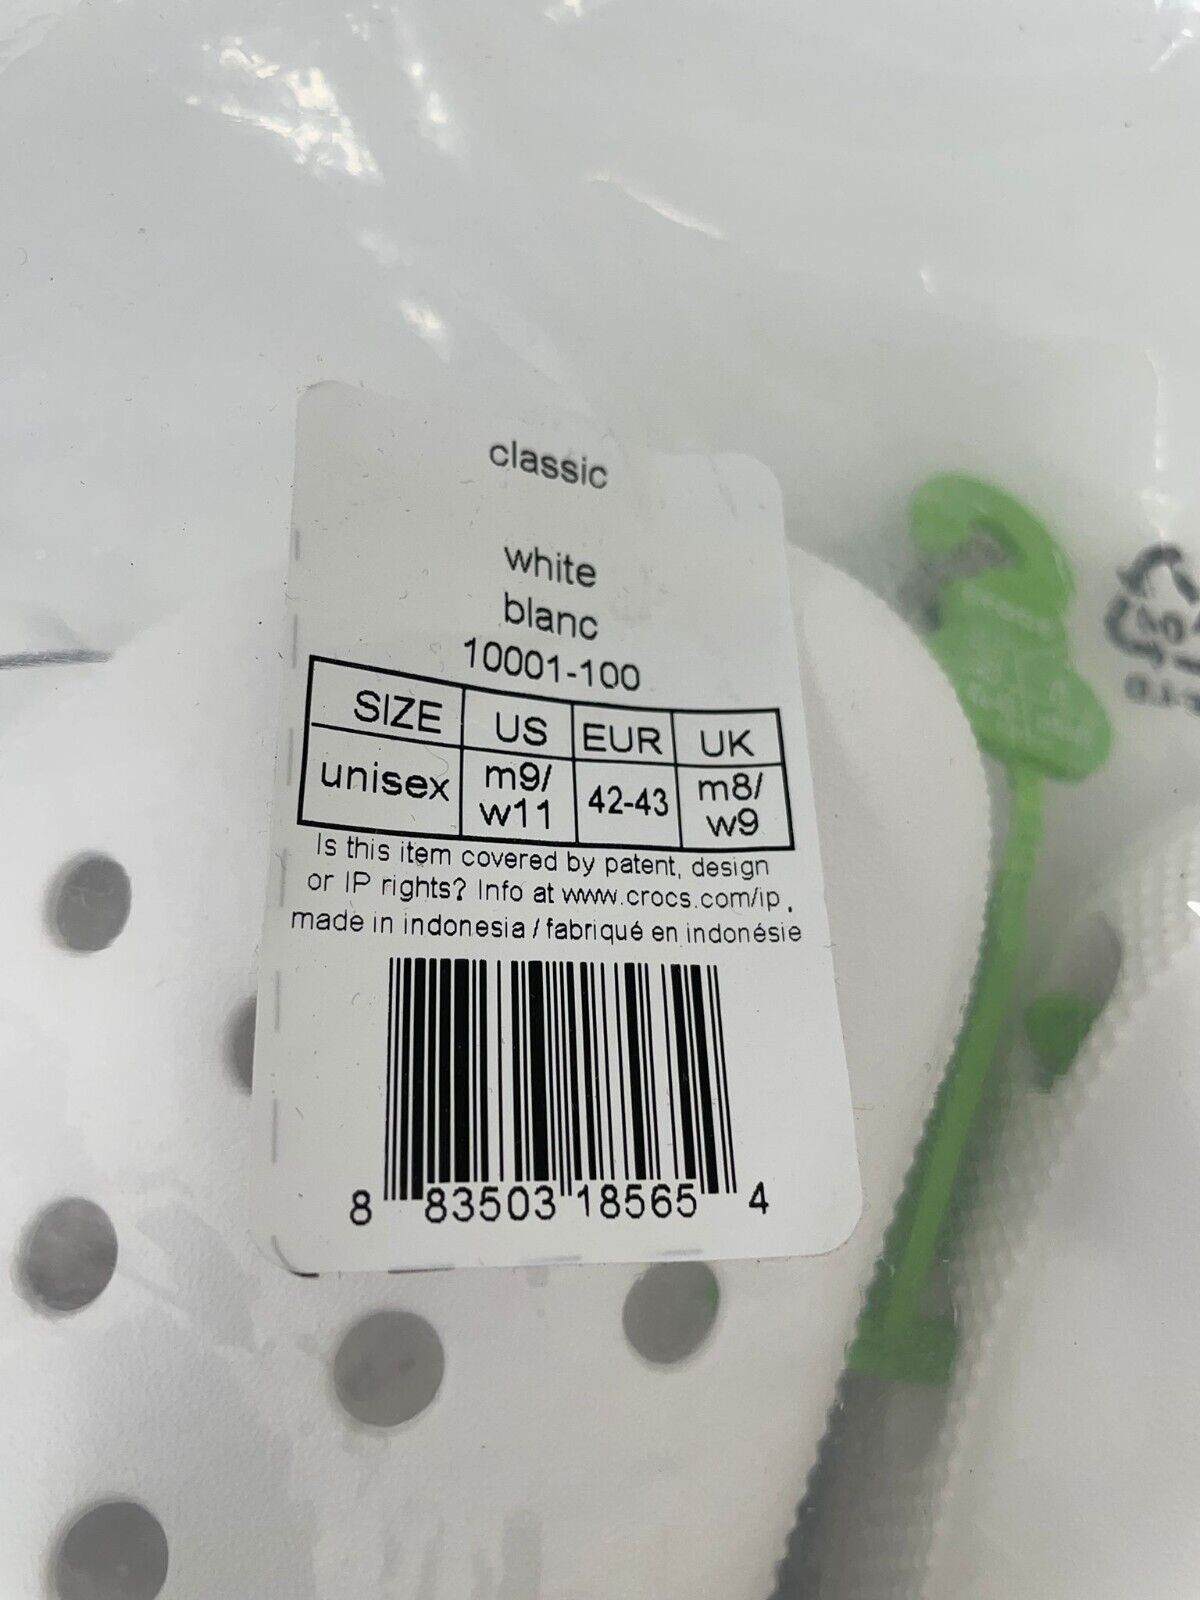 Crocs Unisex M9 W11 Classic Clogs White Comfort Water-Friendly 10001-100 Mens